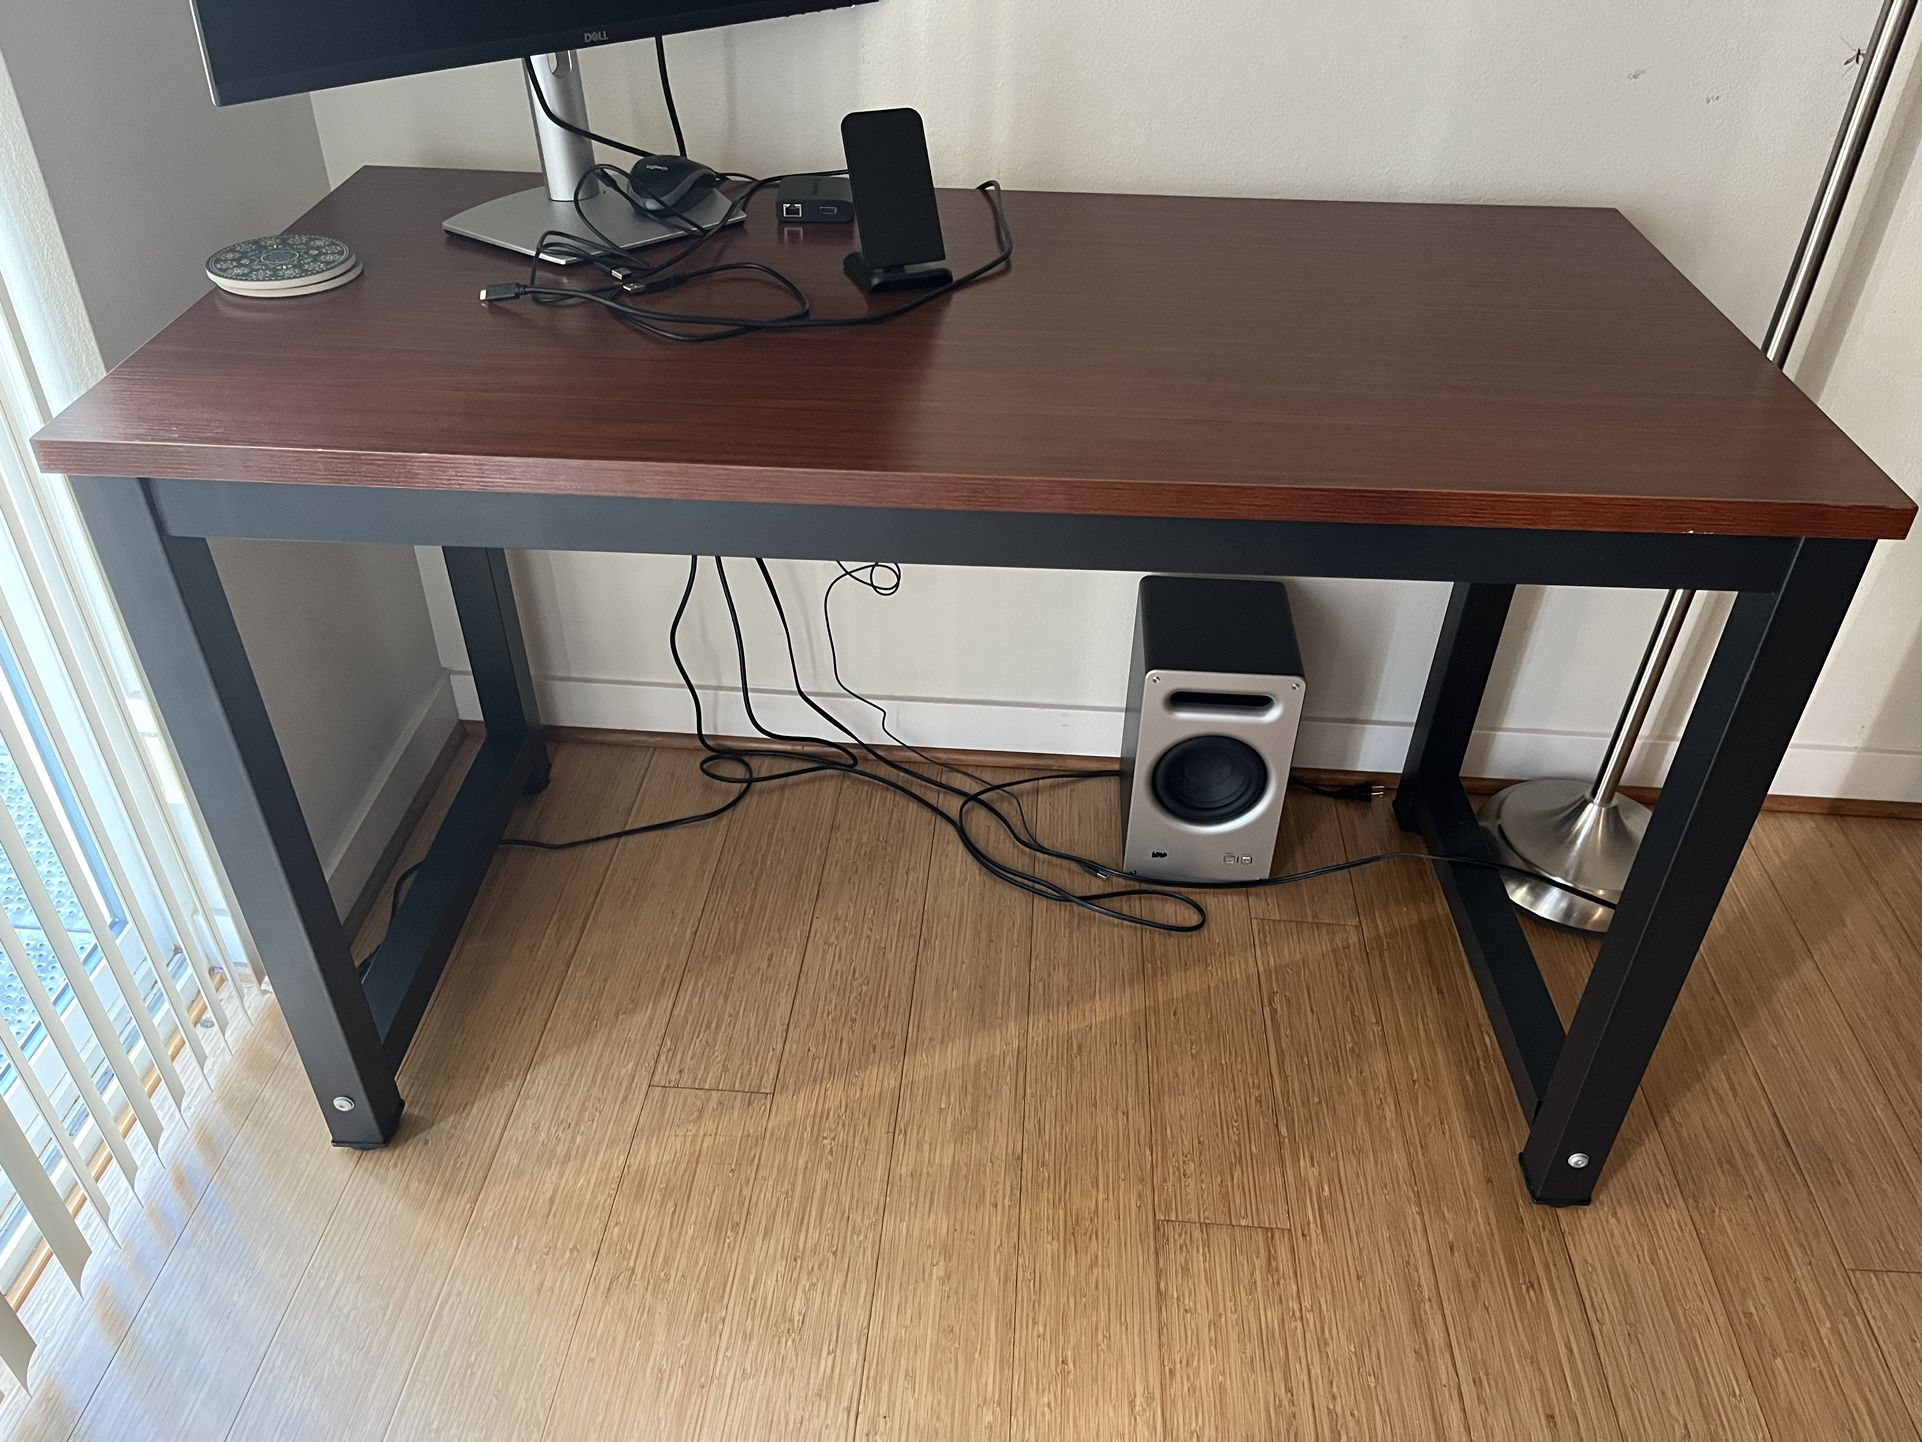 Office Desk - Brown 